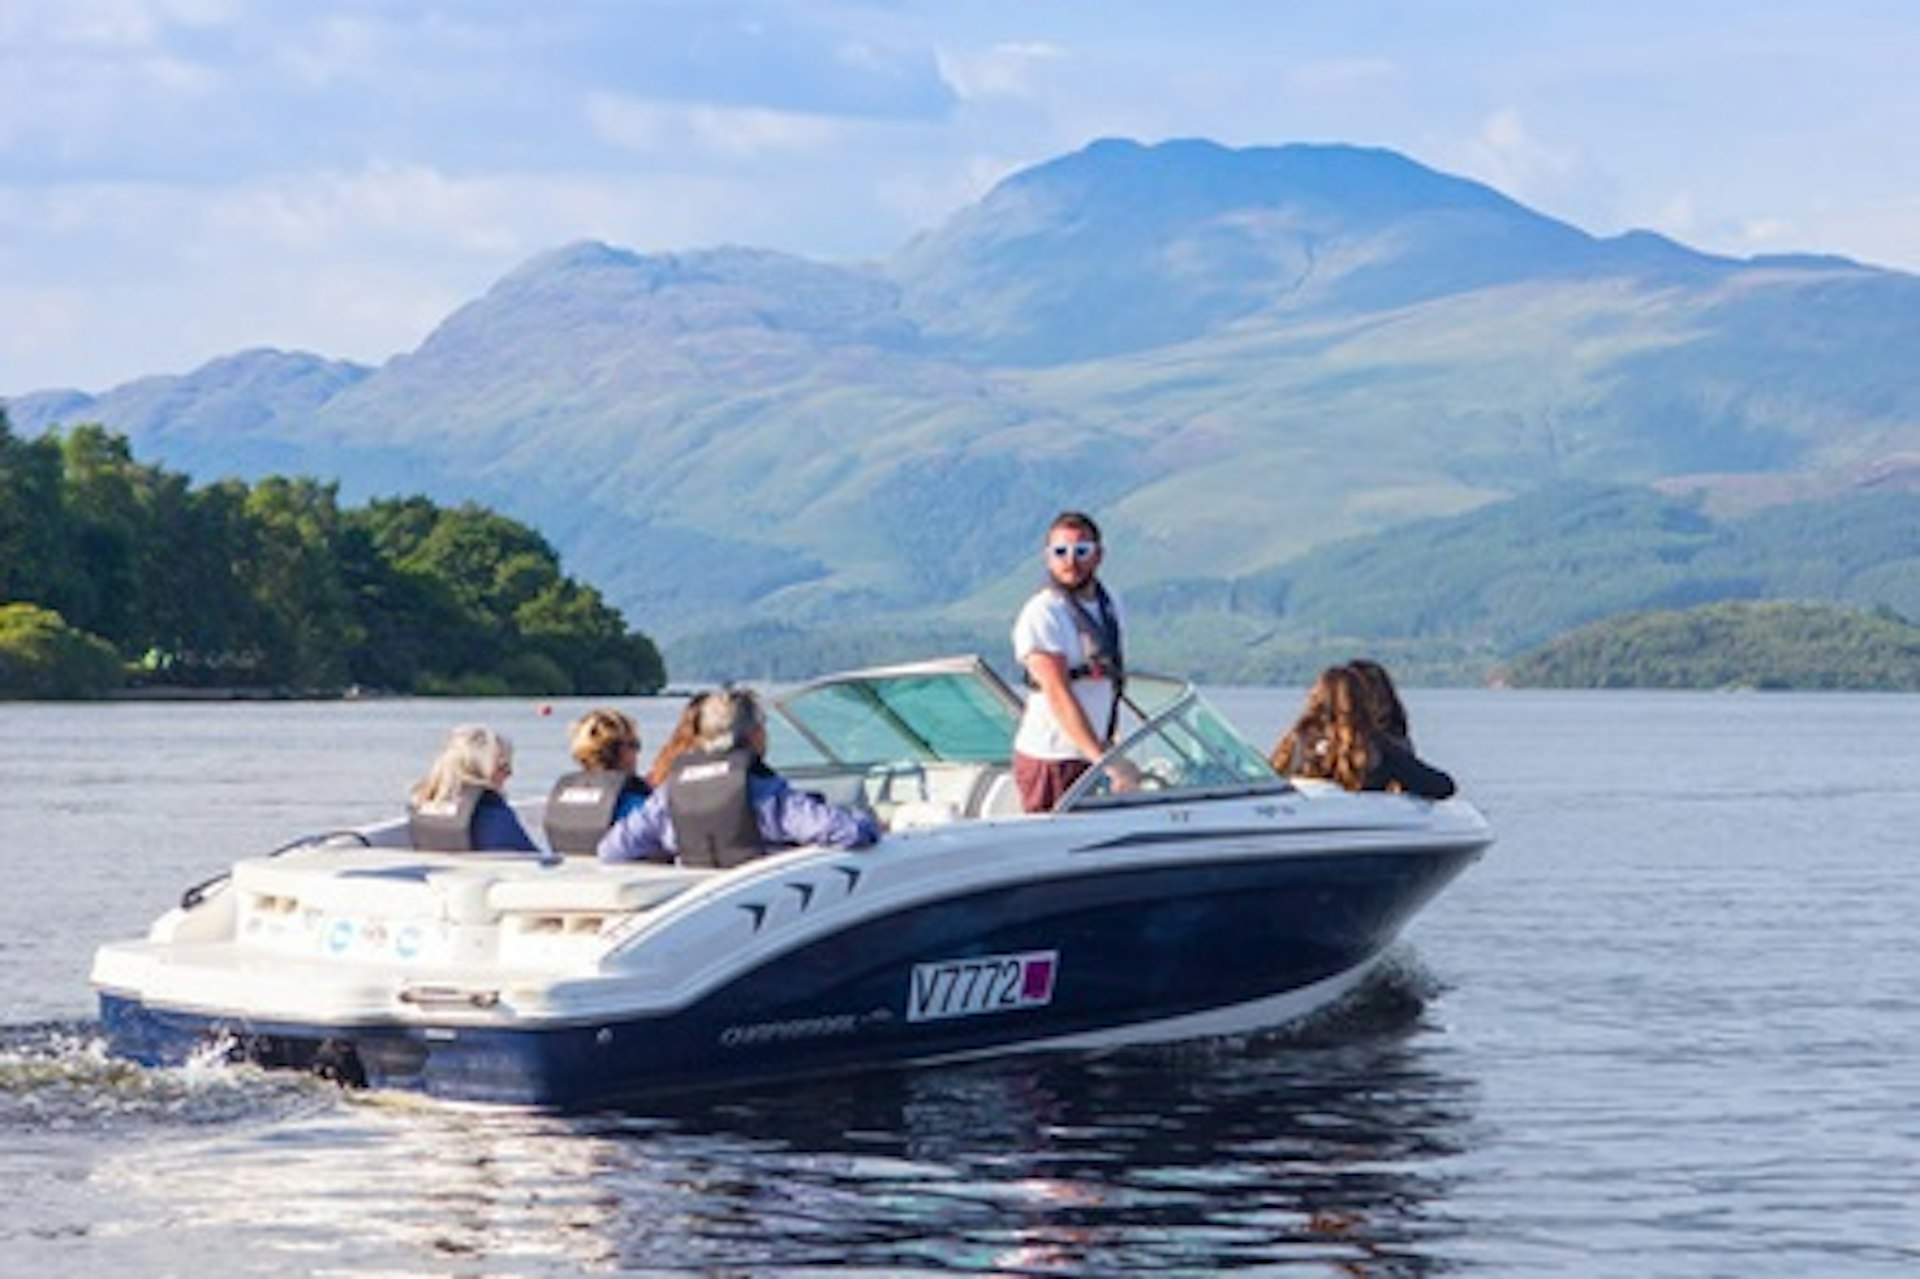 Luxury Speedboat Tour of Loch Lomond for Two 1